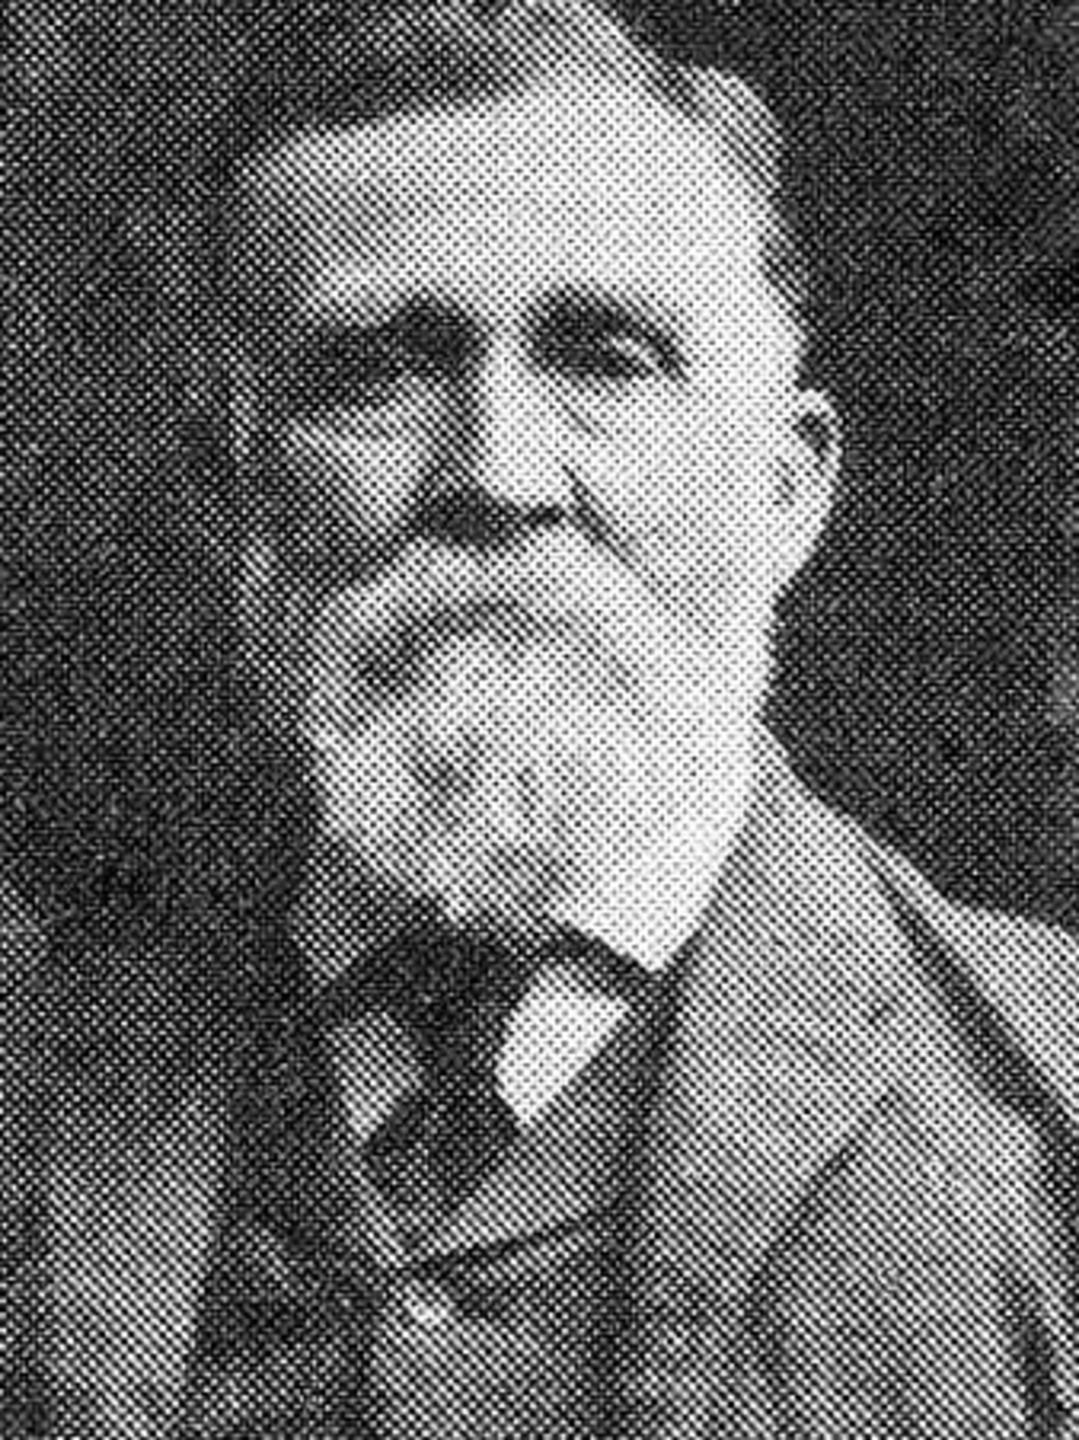 Levi Naylor (1839 - 1913)